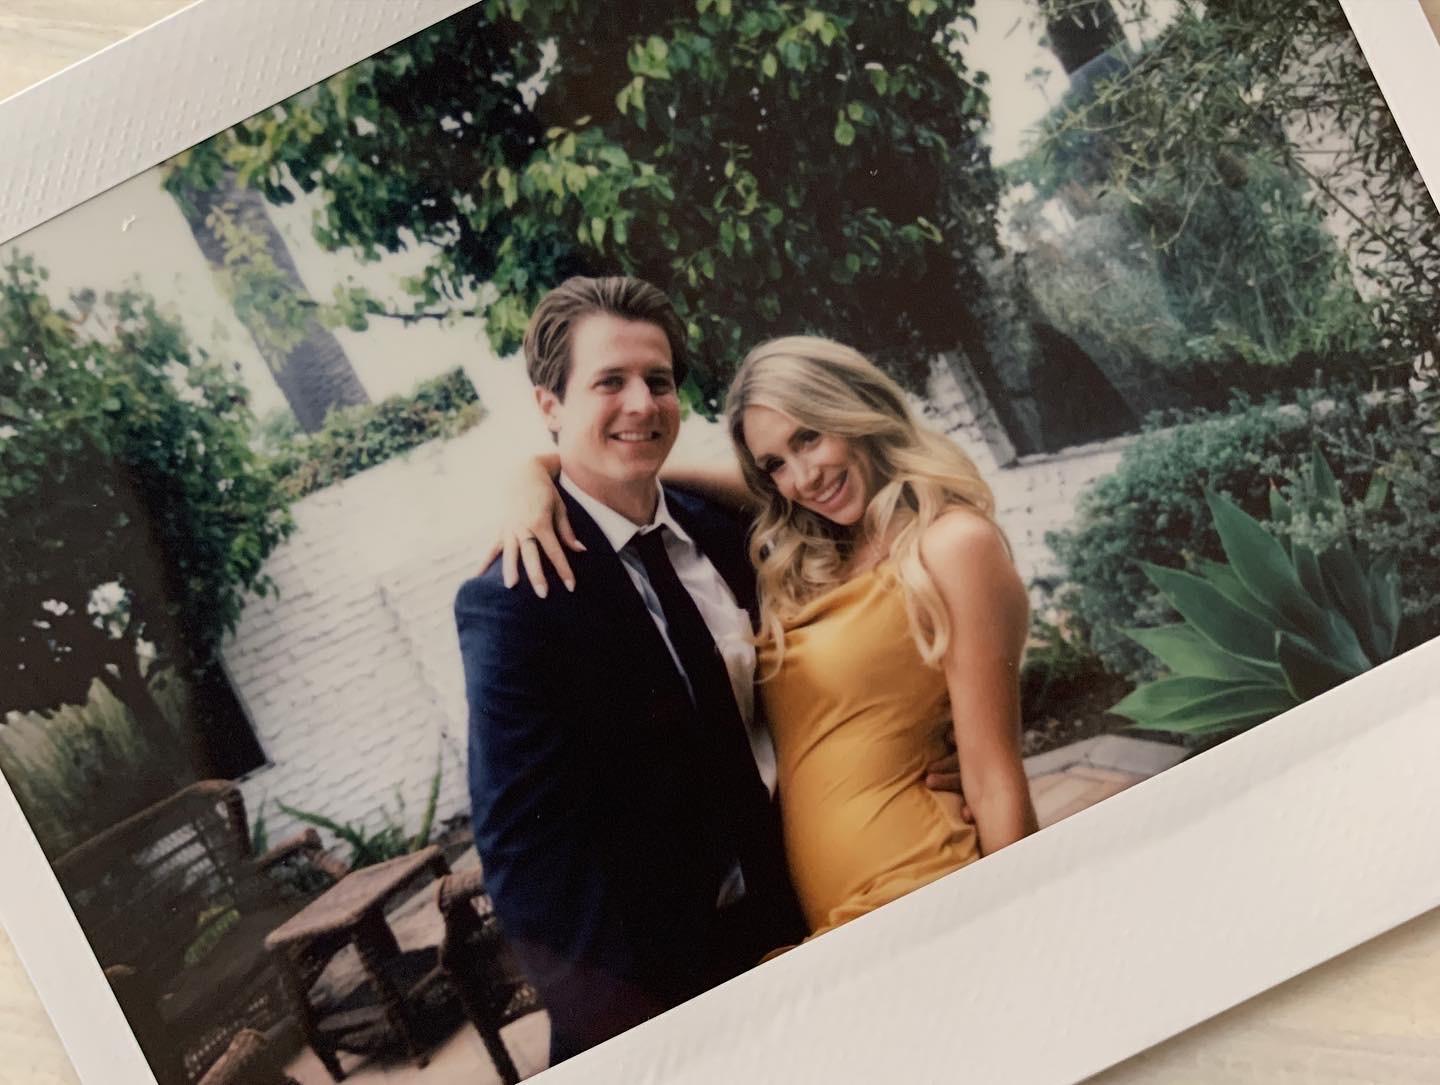 Polaroid from Shaun & Kiley's wedding on July 3, 2021 - Oceanside, CA